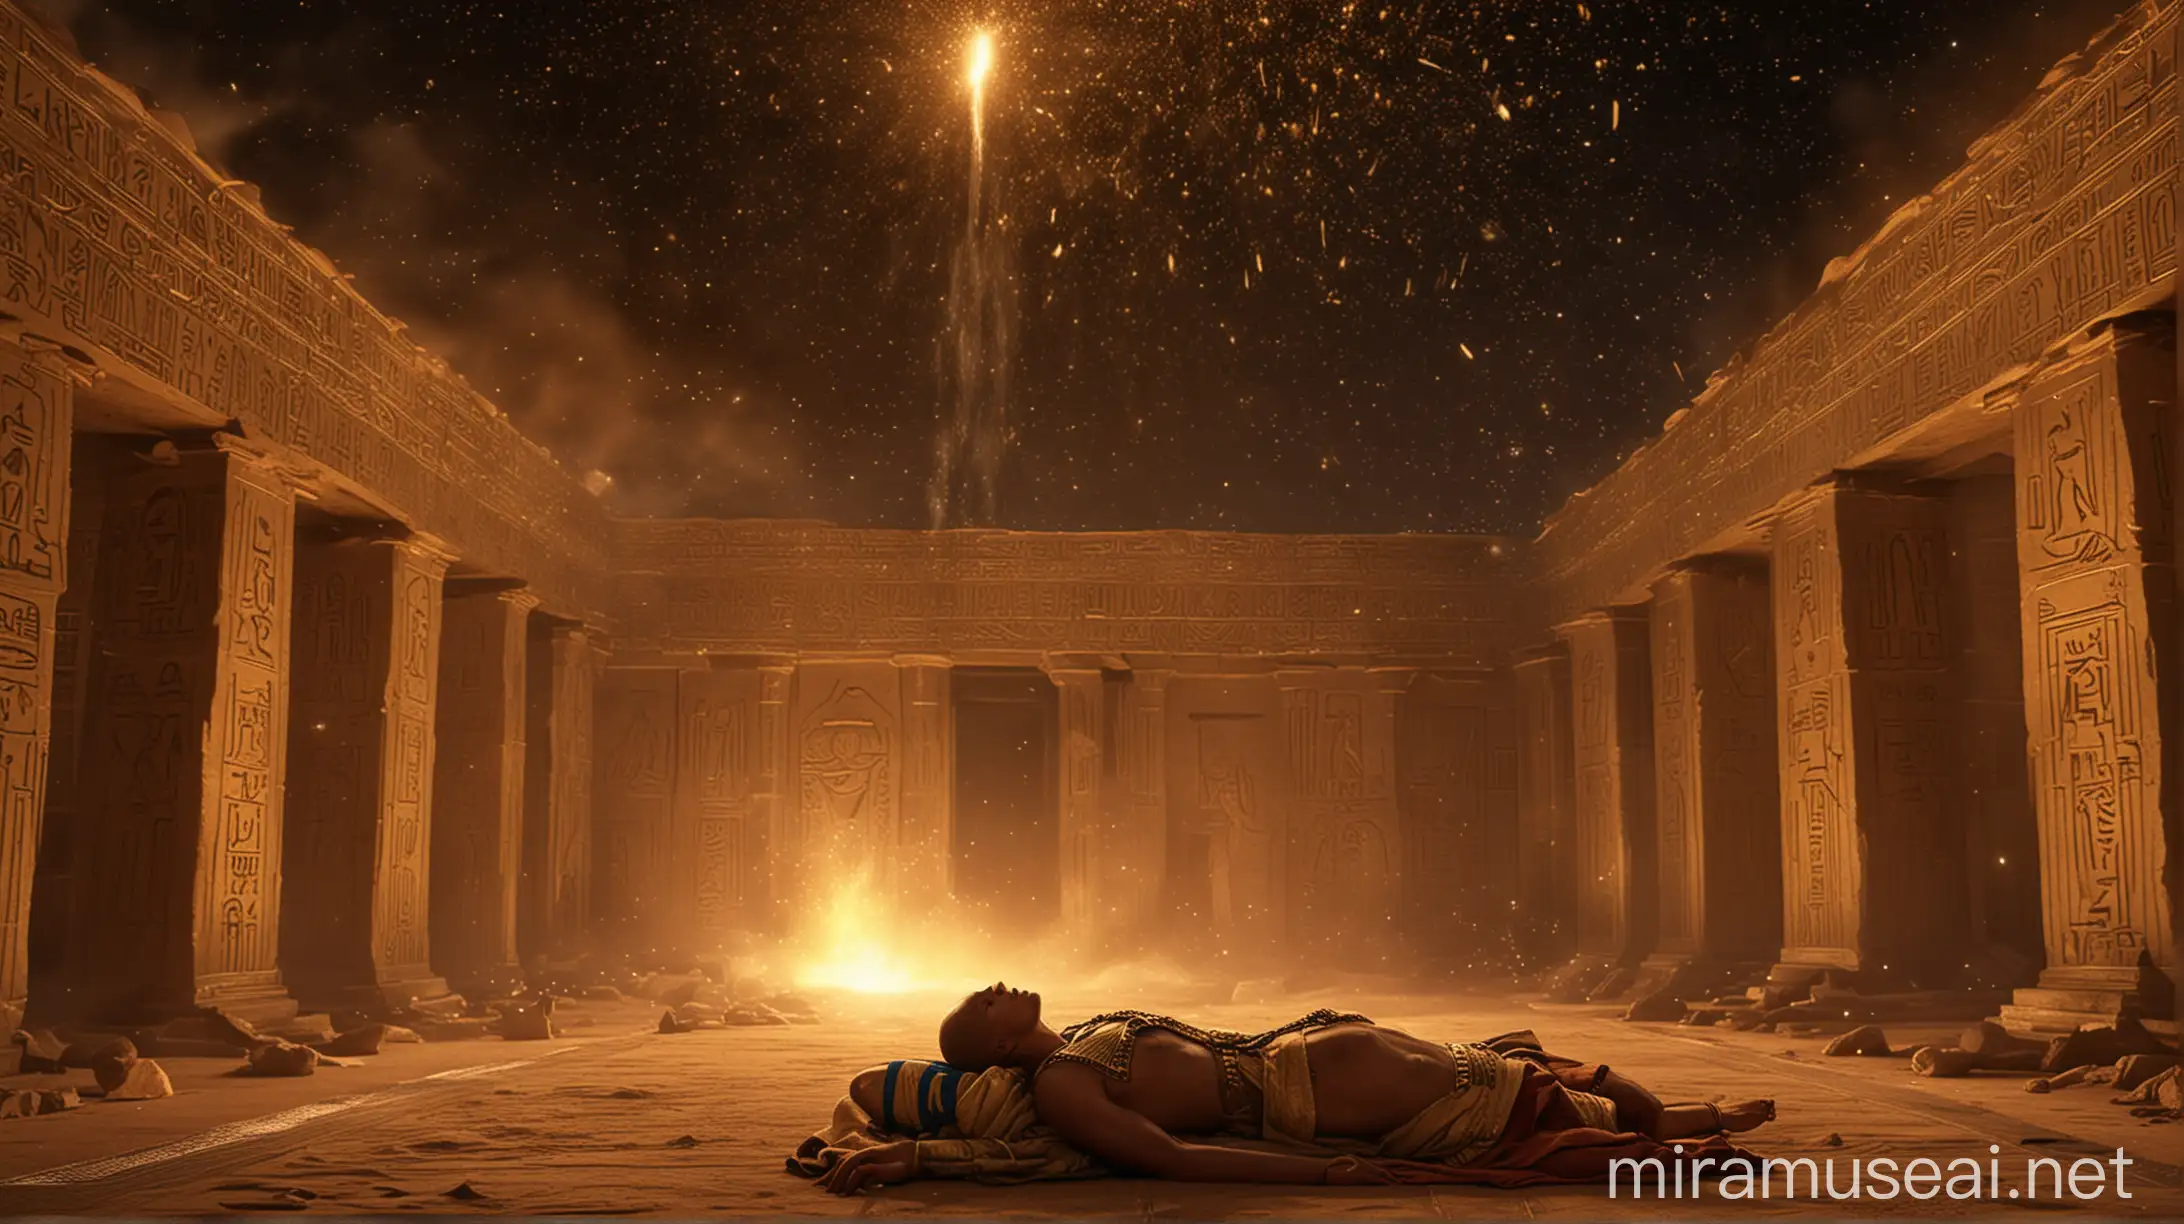 Pharaohs Dream A Vivid Ancient Egyptian Palace Dream Sequence